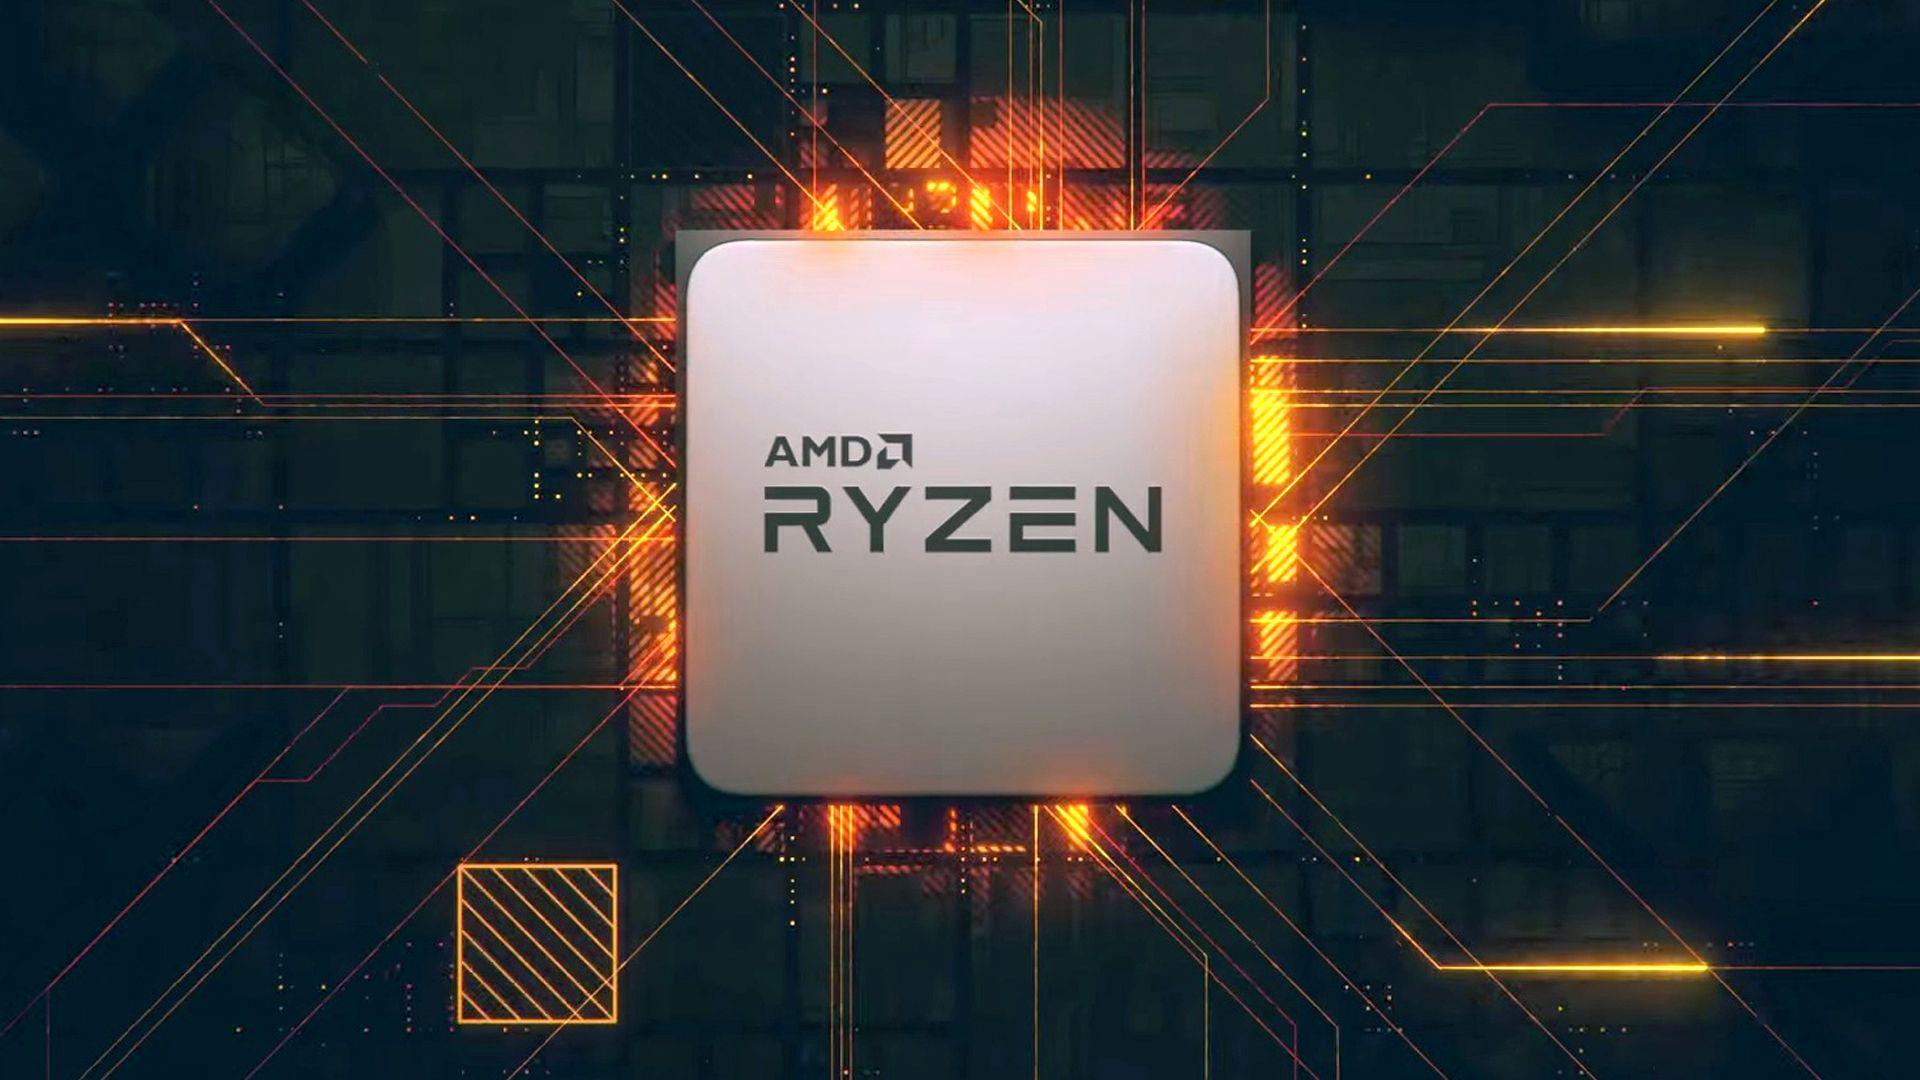 AMD Ryzen 5 2600X Processor Computer Reviews